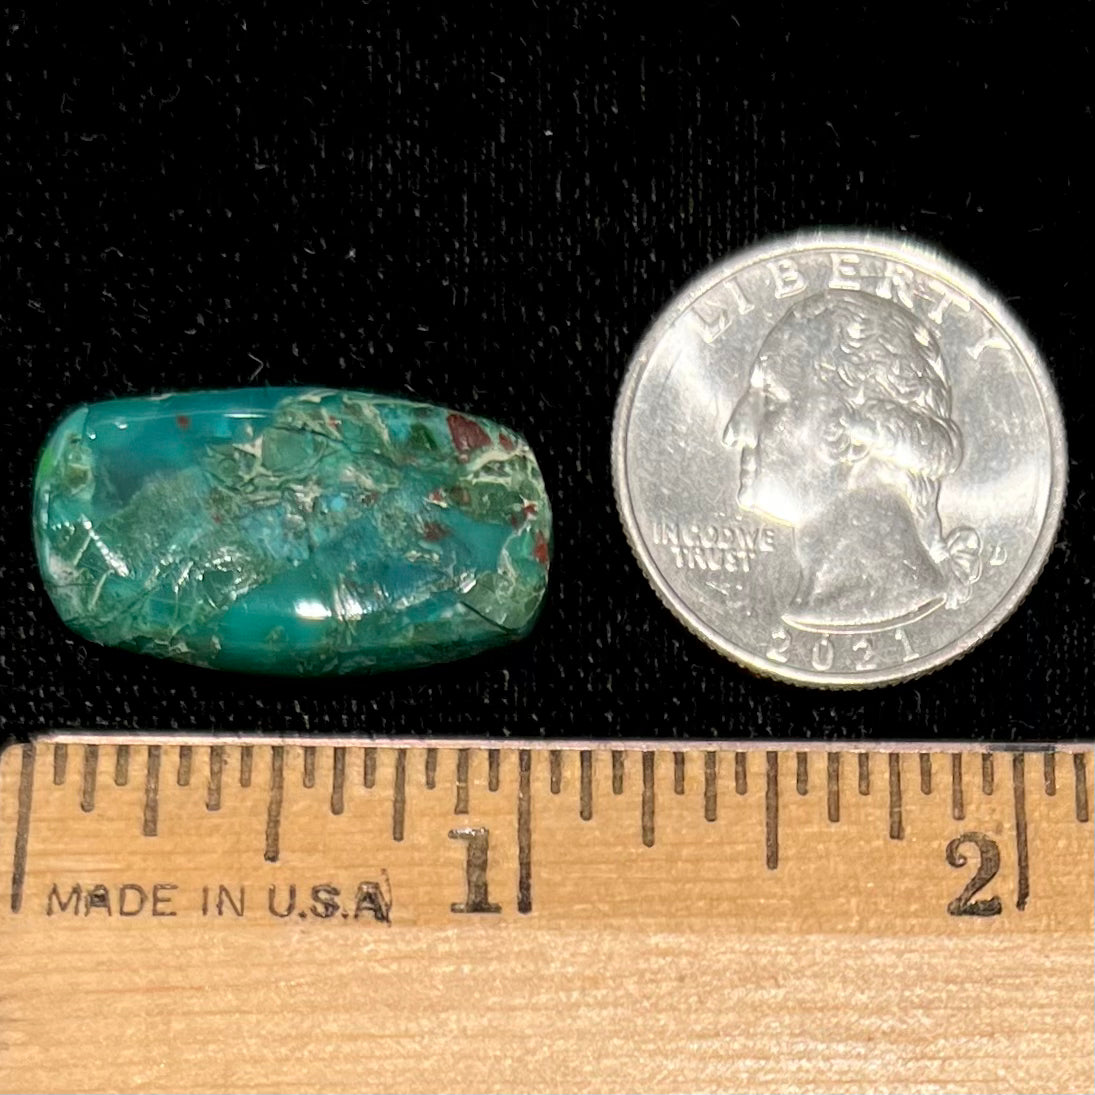 A loose, green, barrel cabochon shaped chrysocolla stone from Morenci, Arizona.